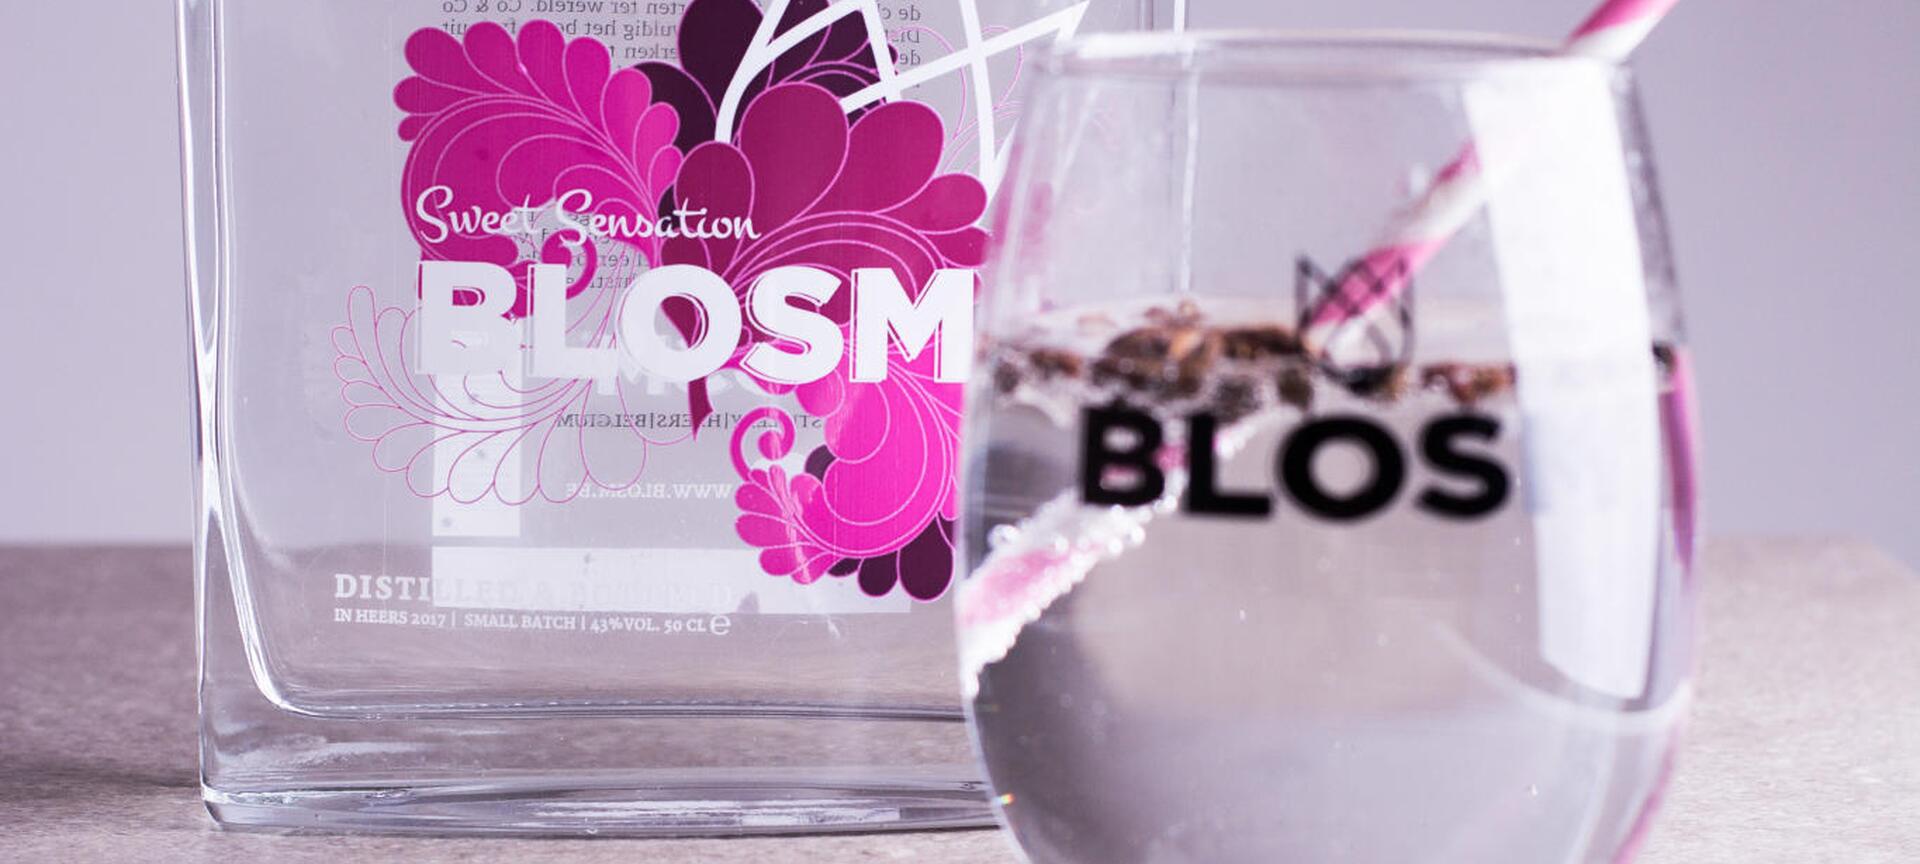 Stokerij Blosm - Gin Sweet Sensation